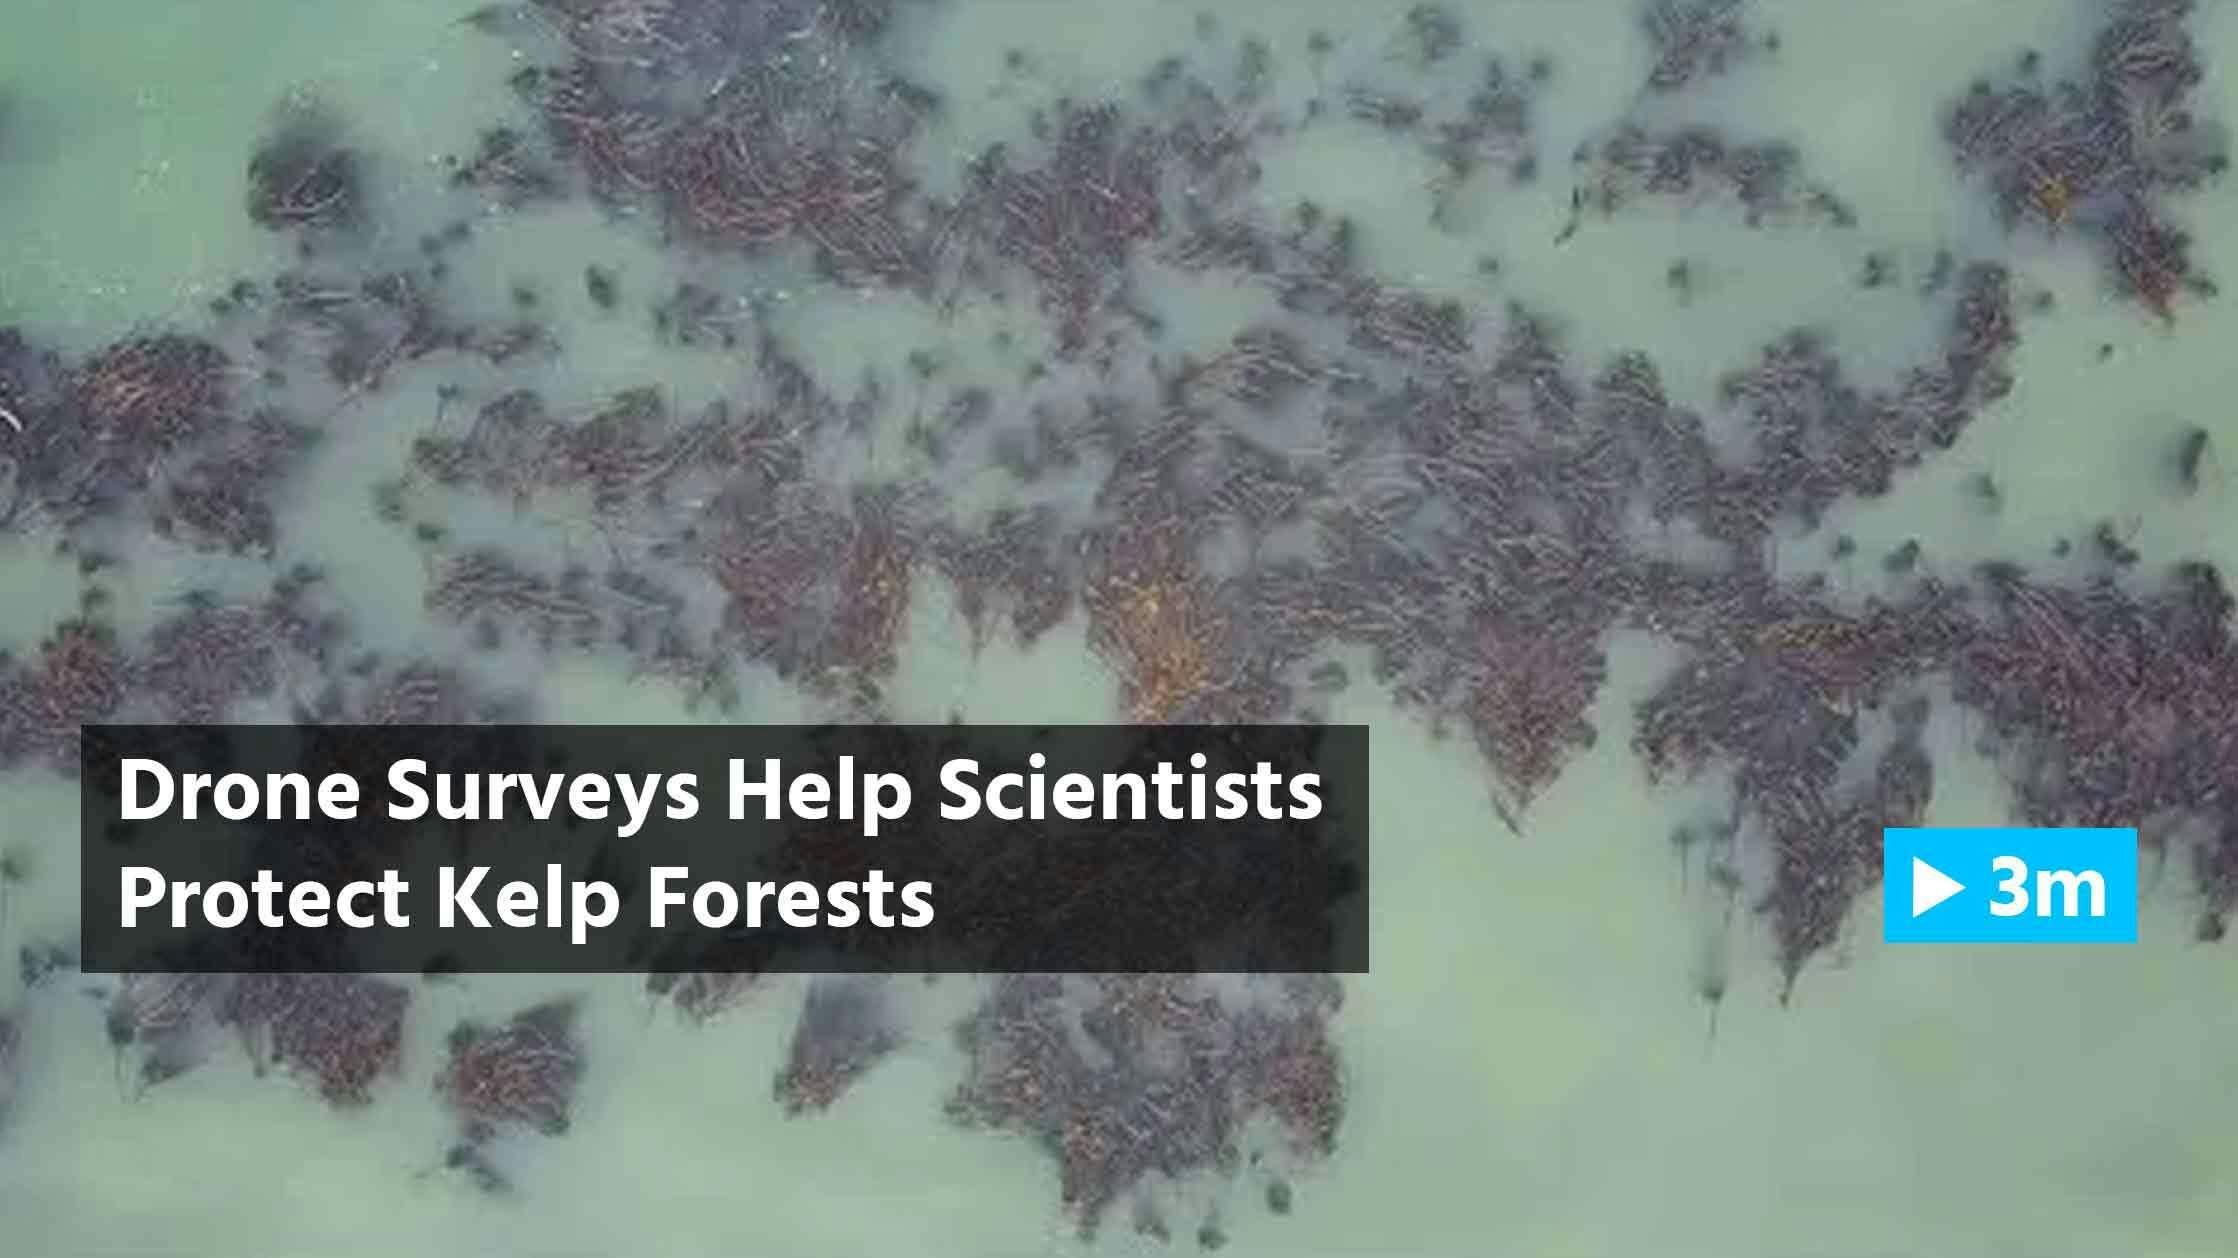 Reuters Report: Drone surveys help scientists protect kelp forests